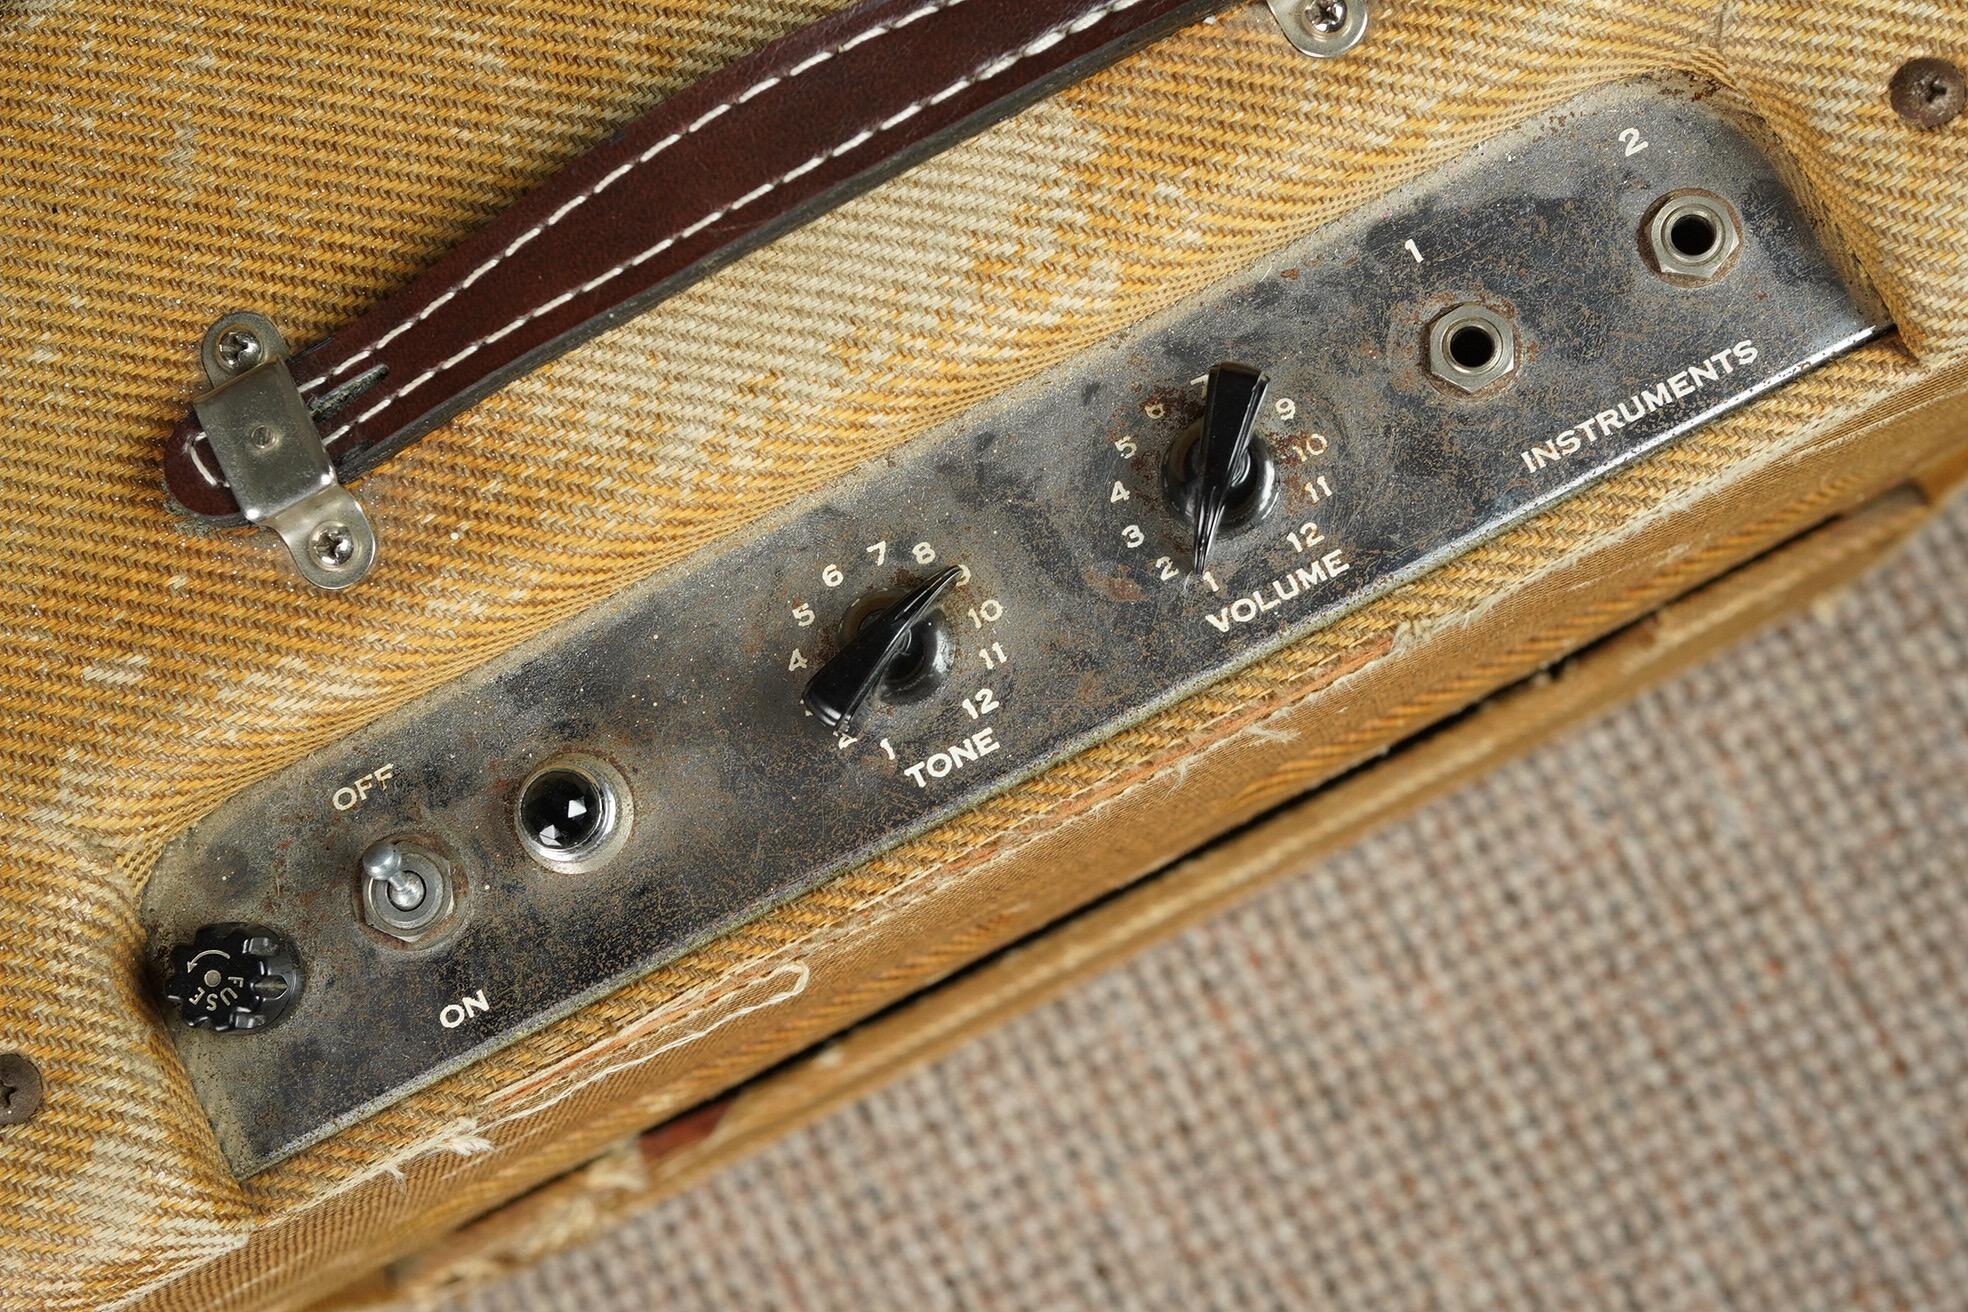 1960 Fender Princeton 5F2